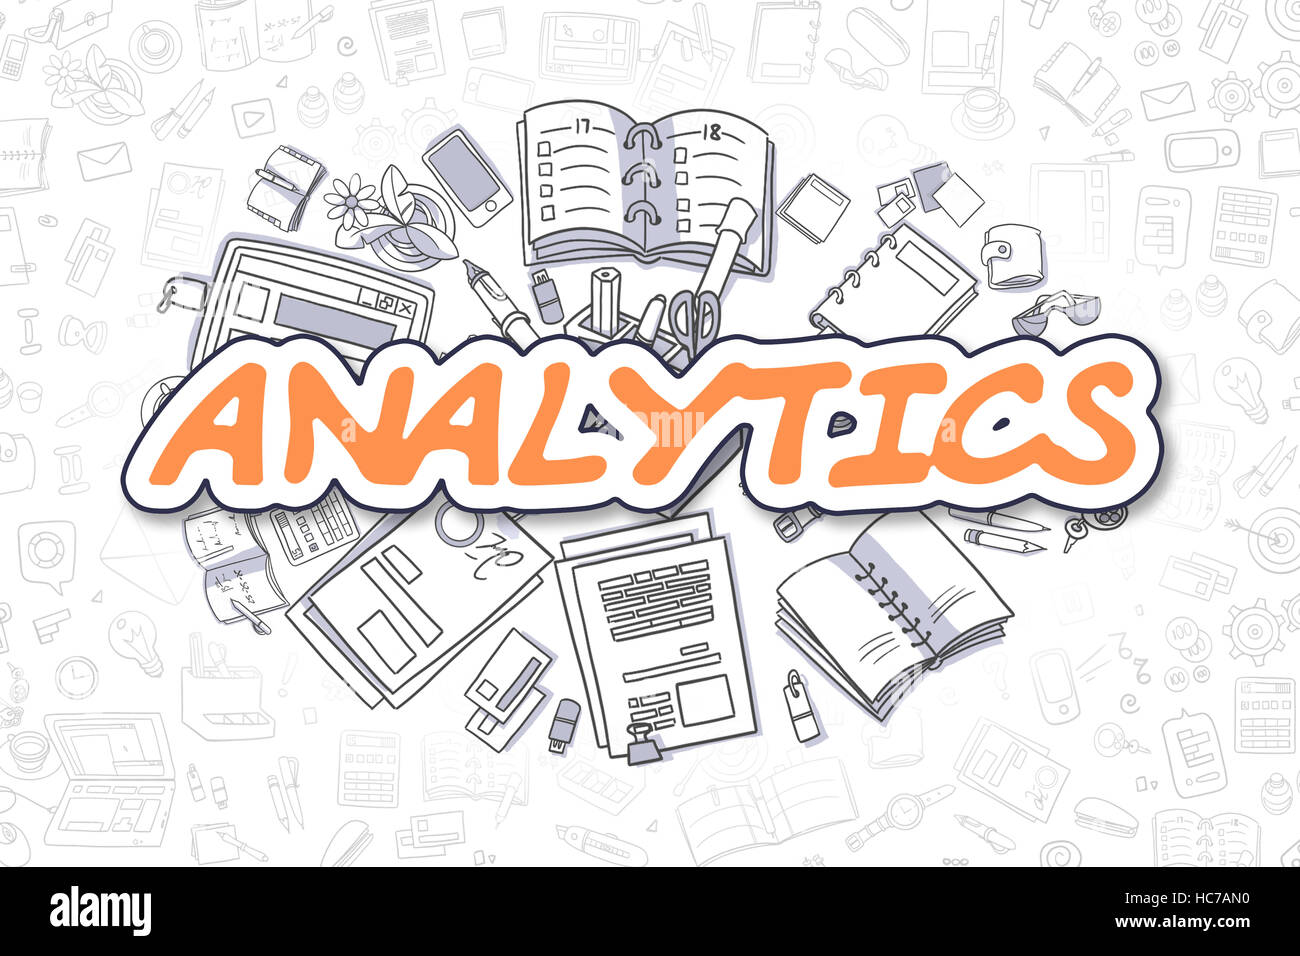 Analytics - Cartoon Orange Text. Business Concept. Stock Photo